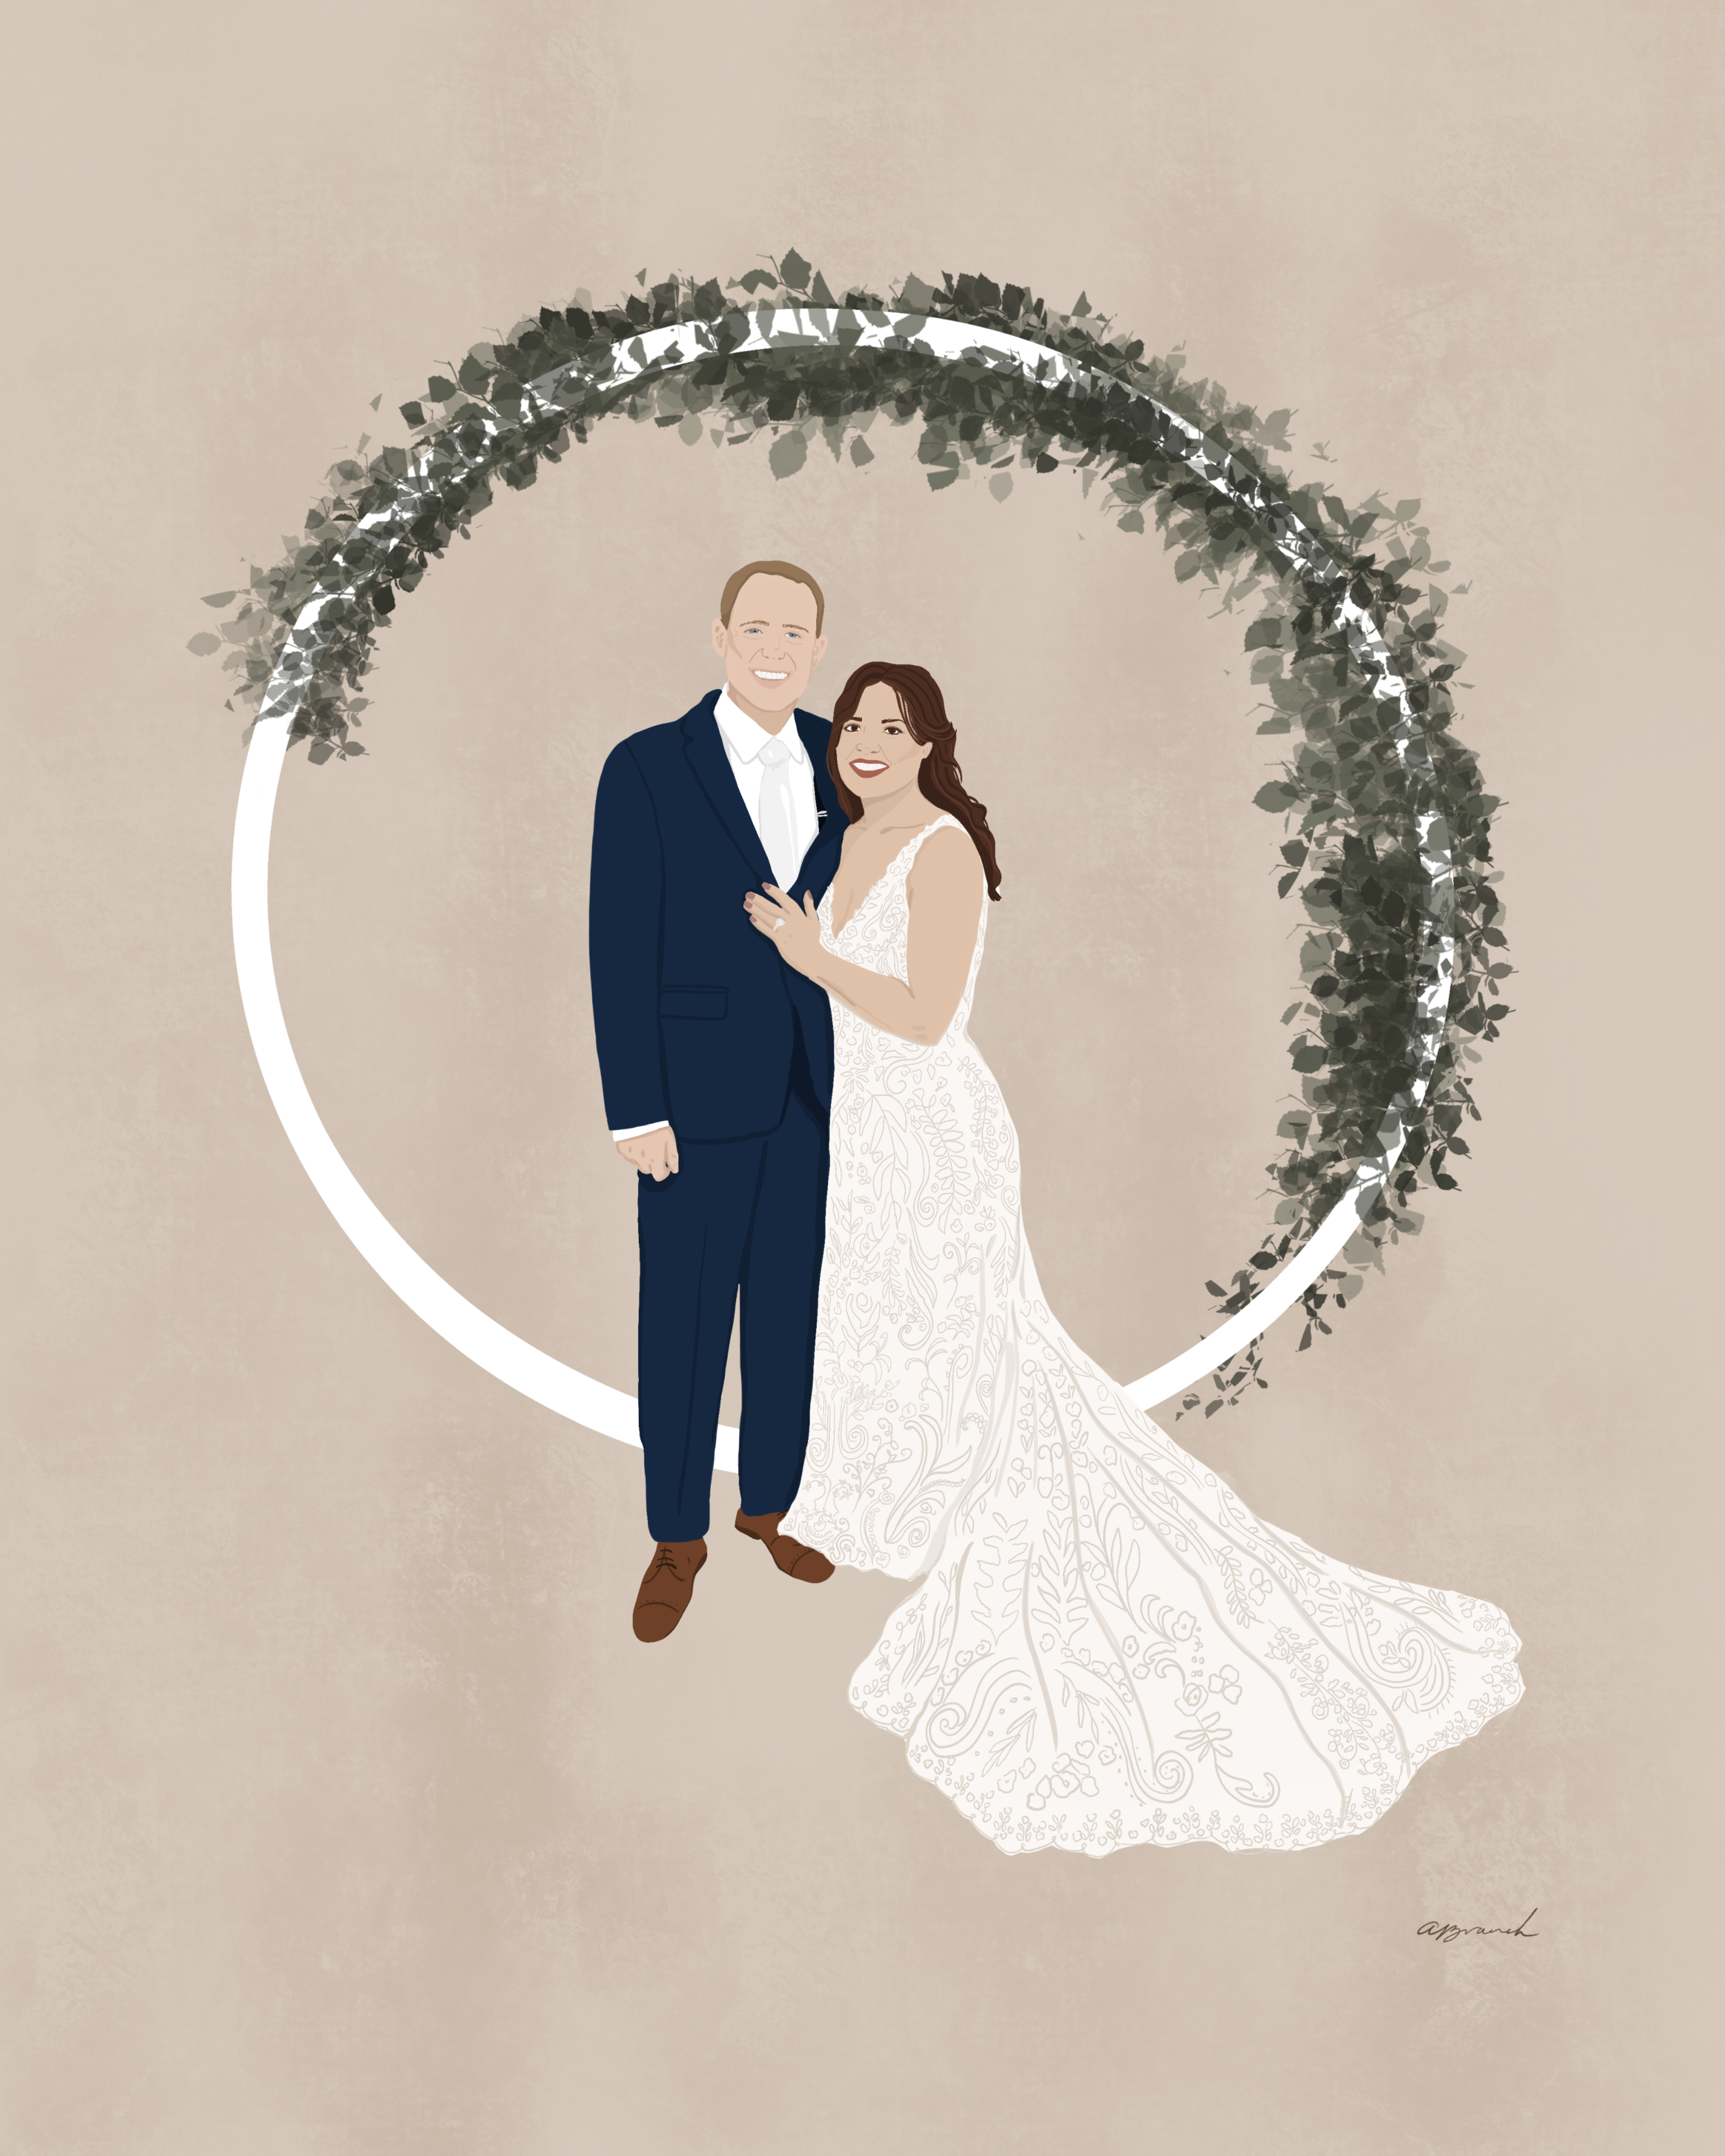 Custom Illustration for a wedding